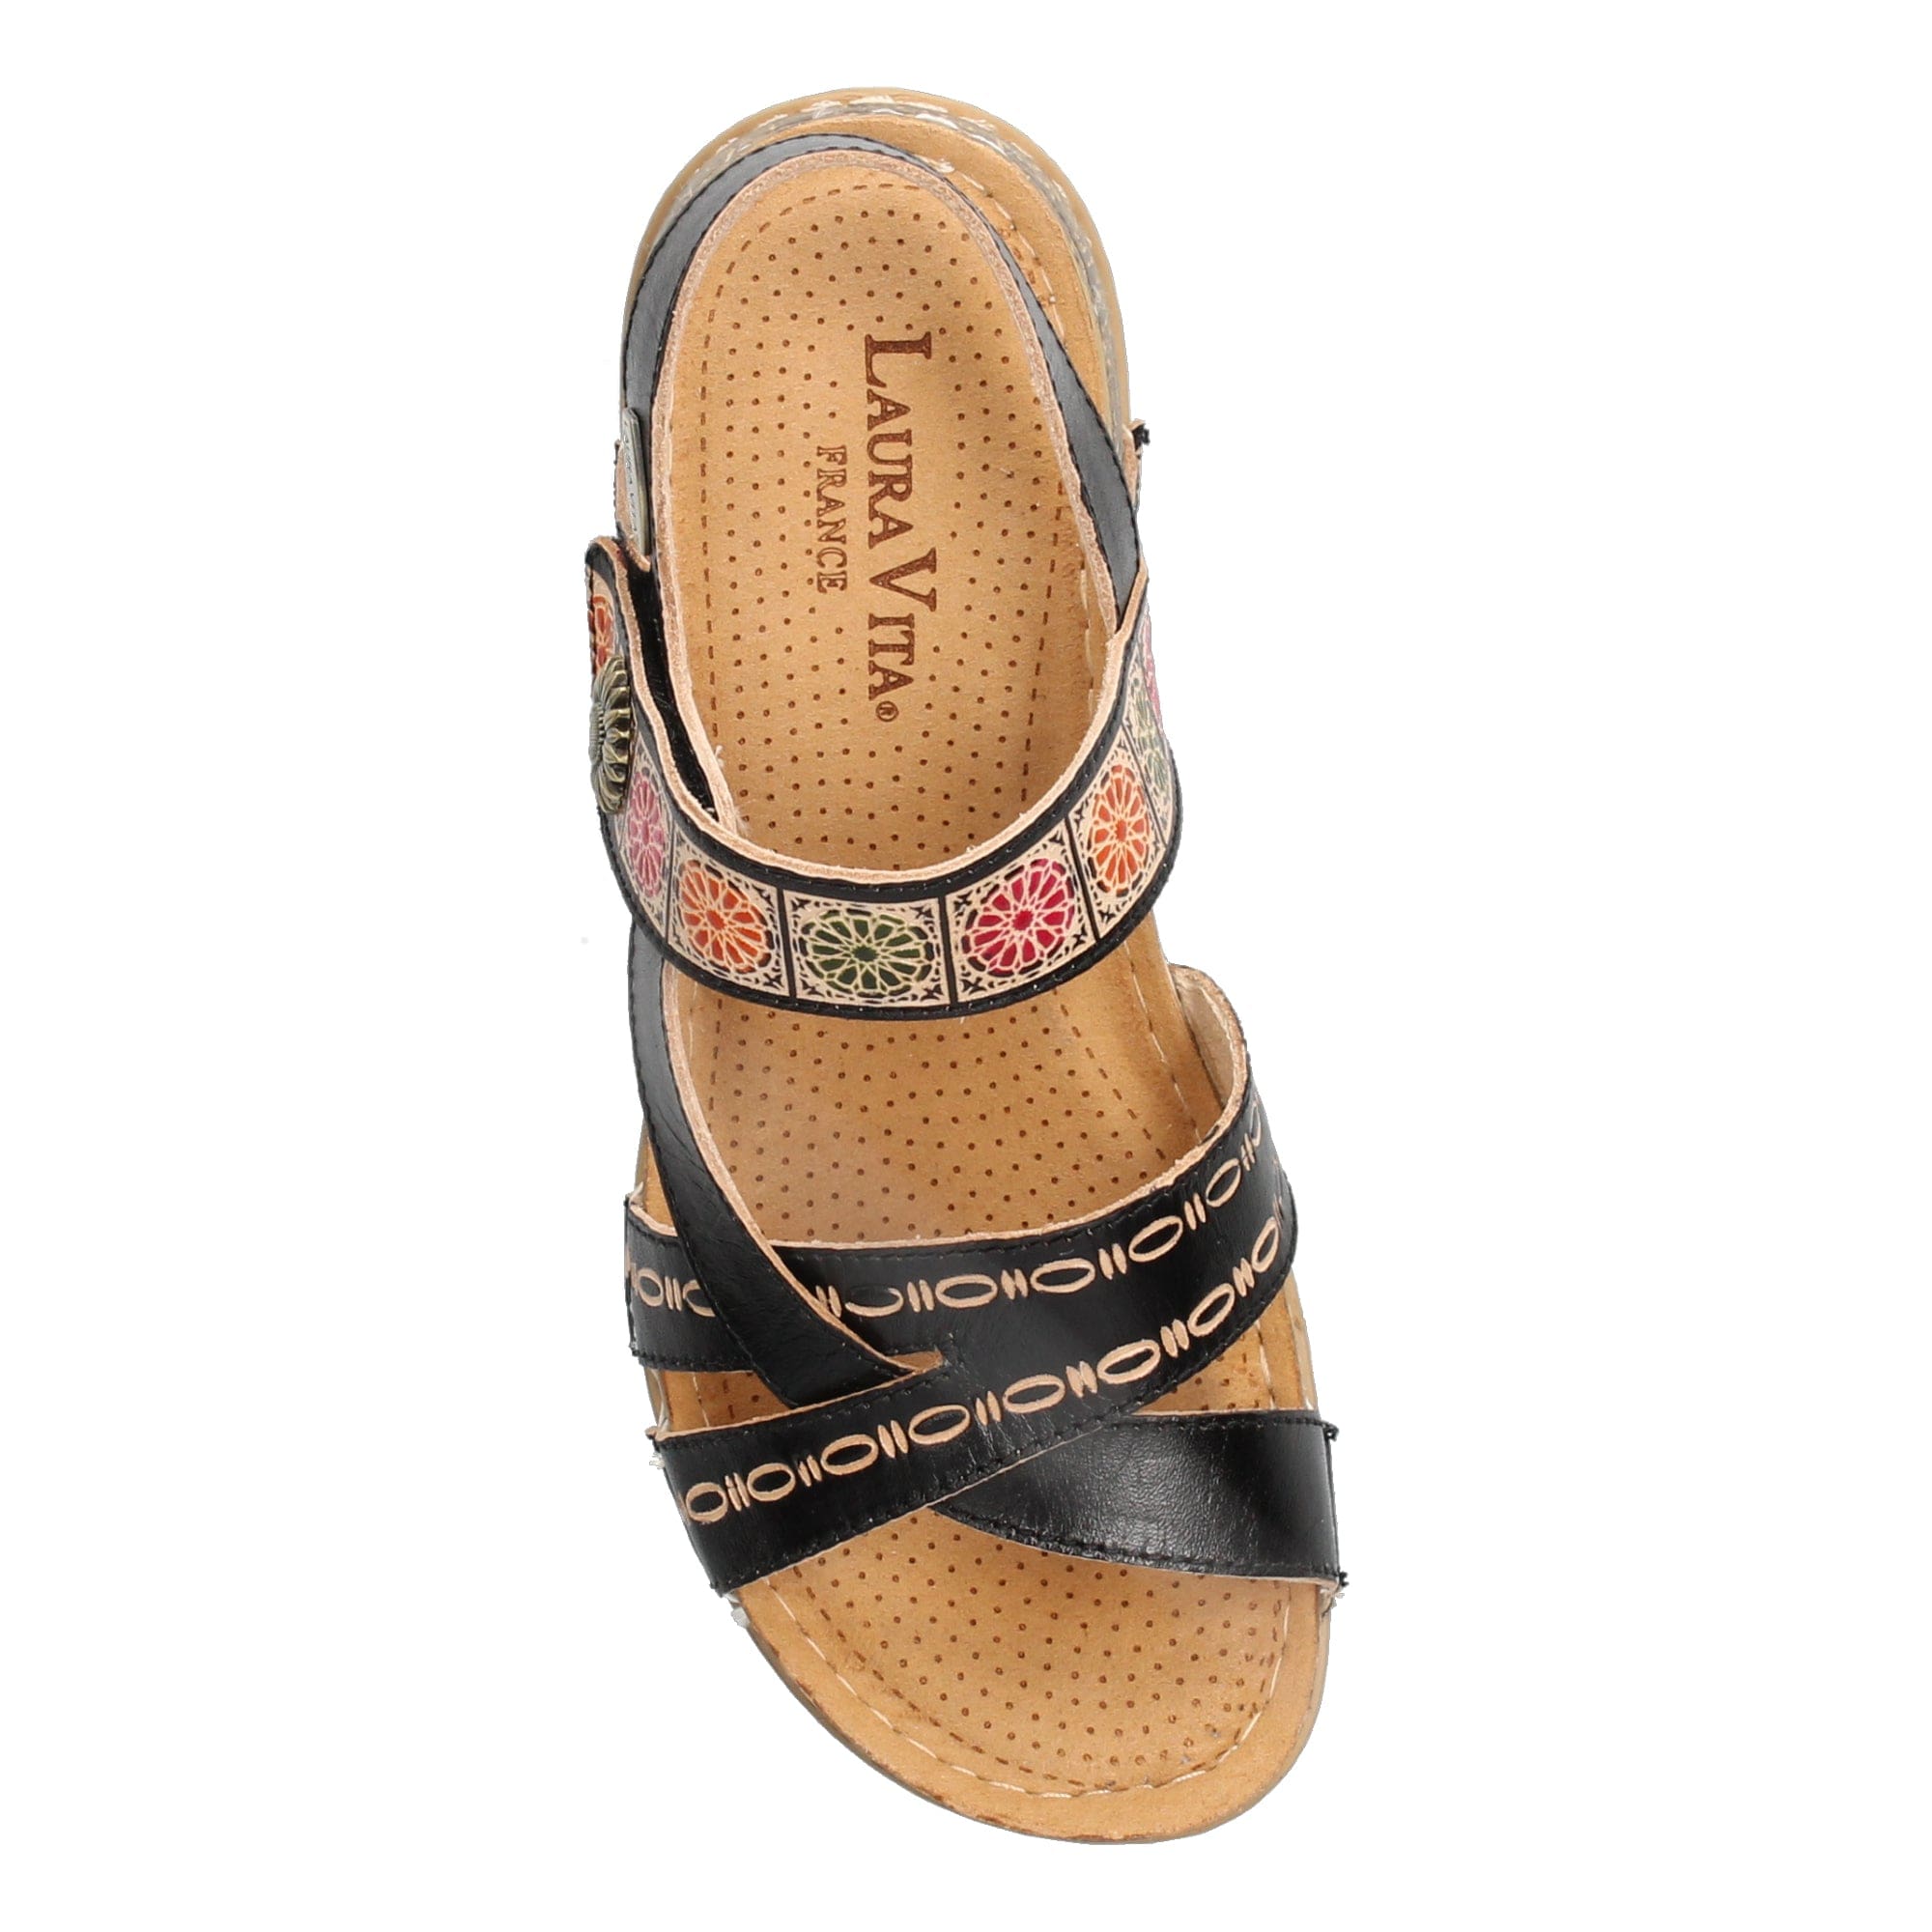 Schuh JACLOUXO 05 - Sandale